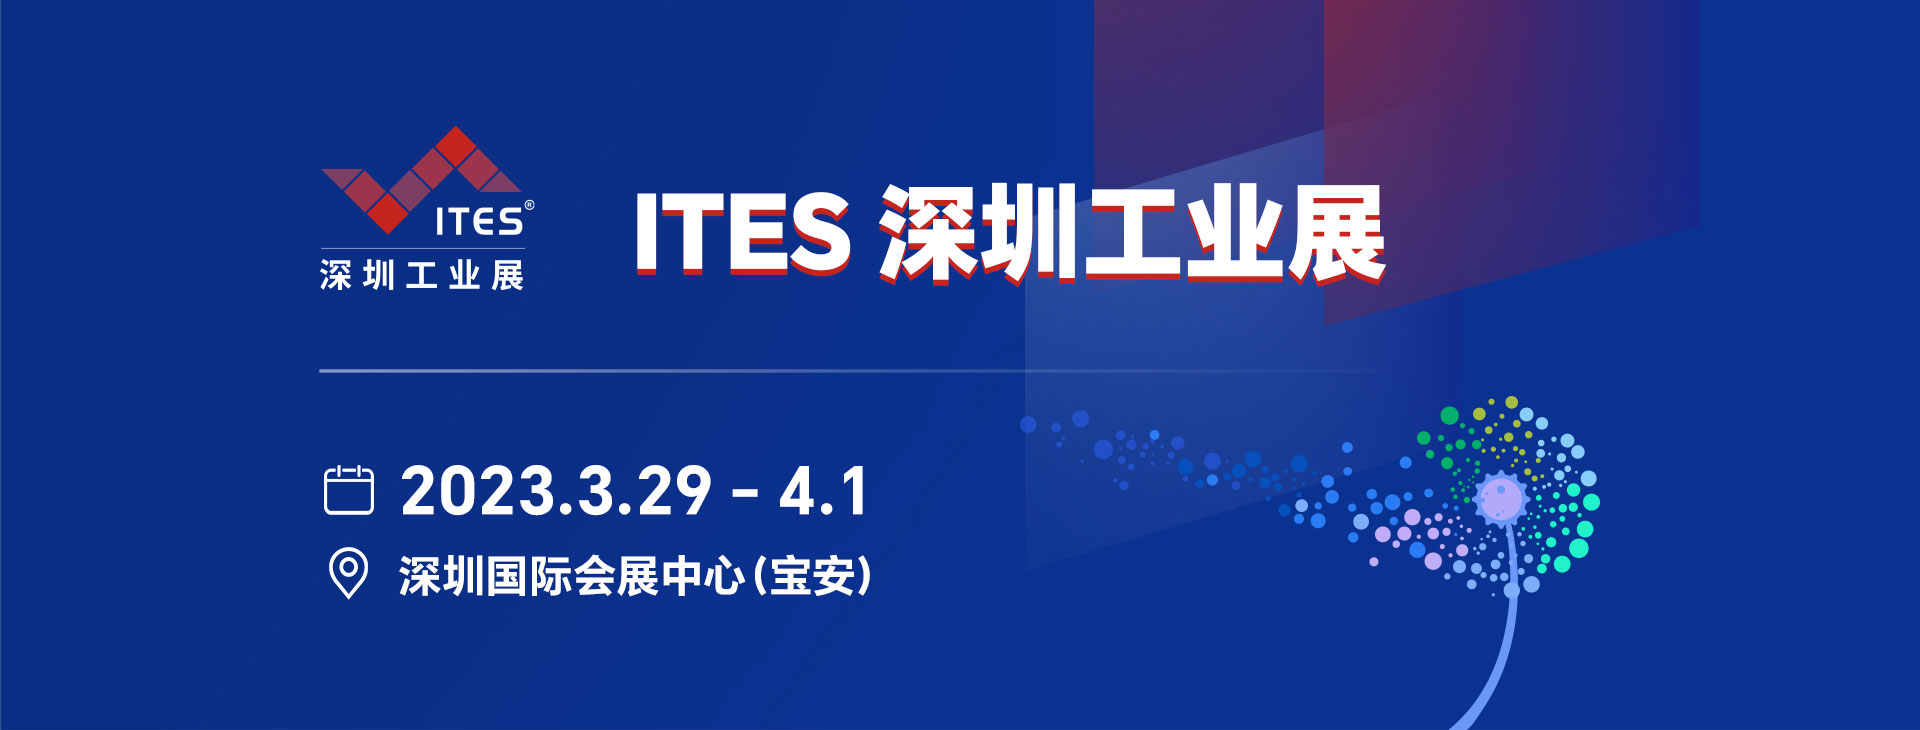 ITES深圳工业展|工业级3D ToF领跑者维感科技邀您共襄盛宴